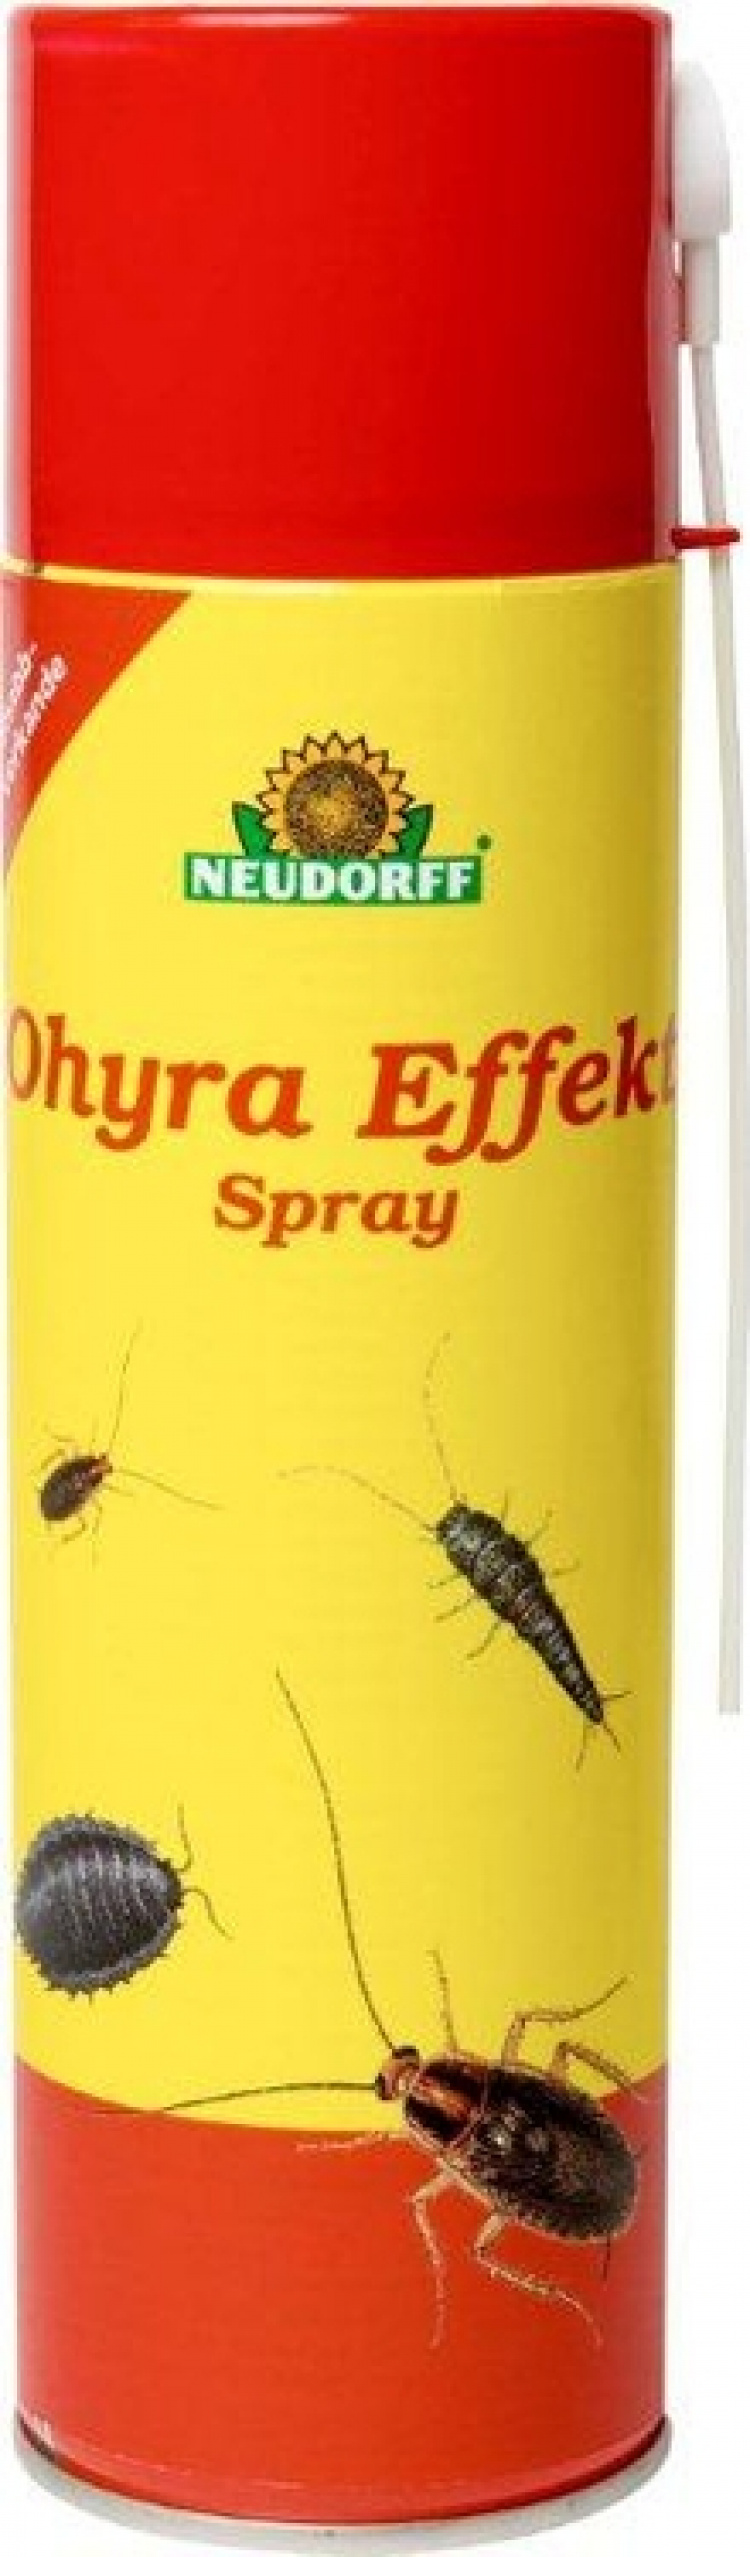 Spray mot ohyra i gruppen Säkerhet / Skadedjur hos SmartaSaker.se (10881)